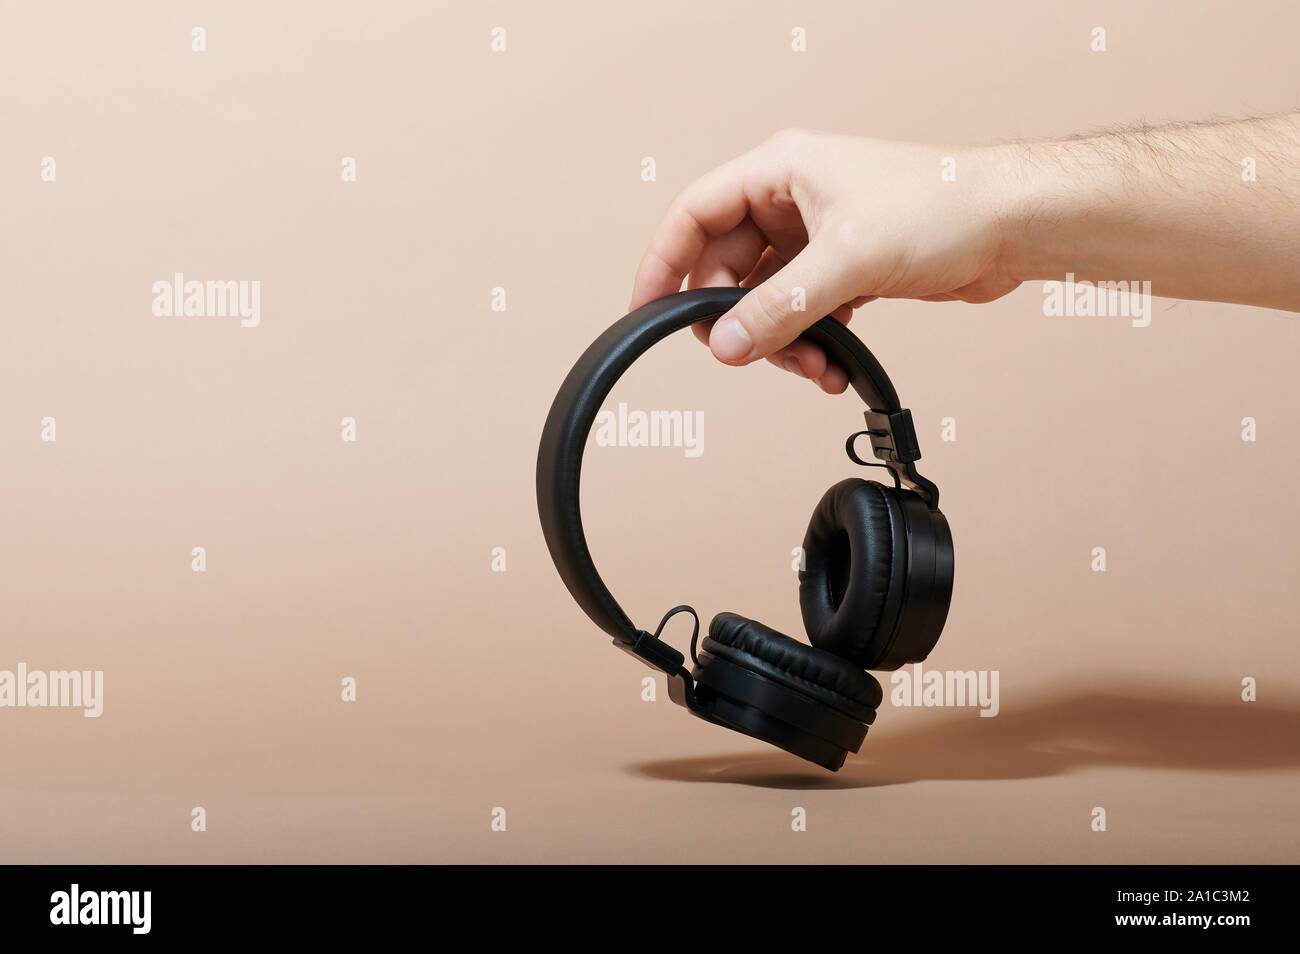 Hand hold wireless headphones isolated on beige background Stock Photo